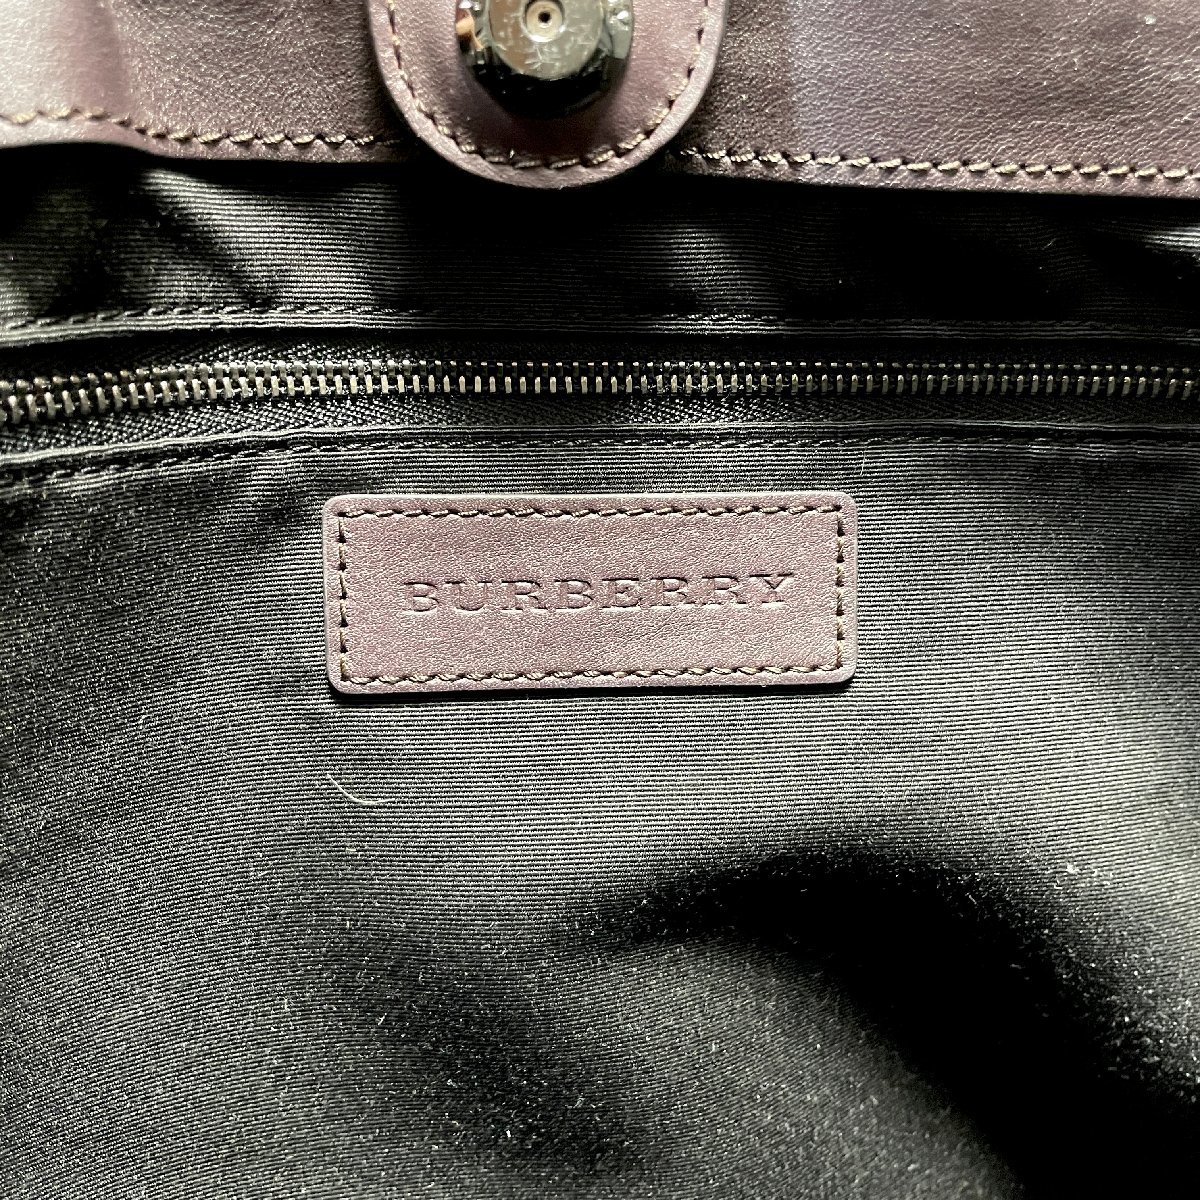 2402-36-4l beautiful goods lBURBERRY Burberry tote bag original leather dark brown Logo plate 